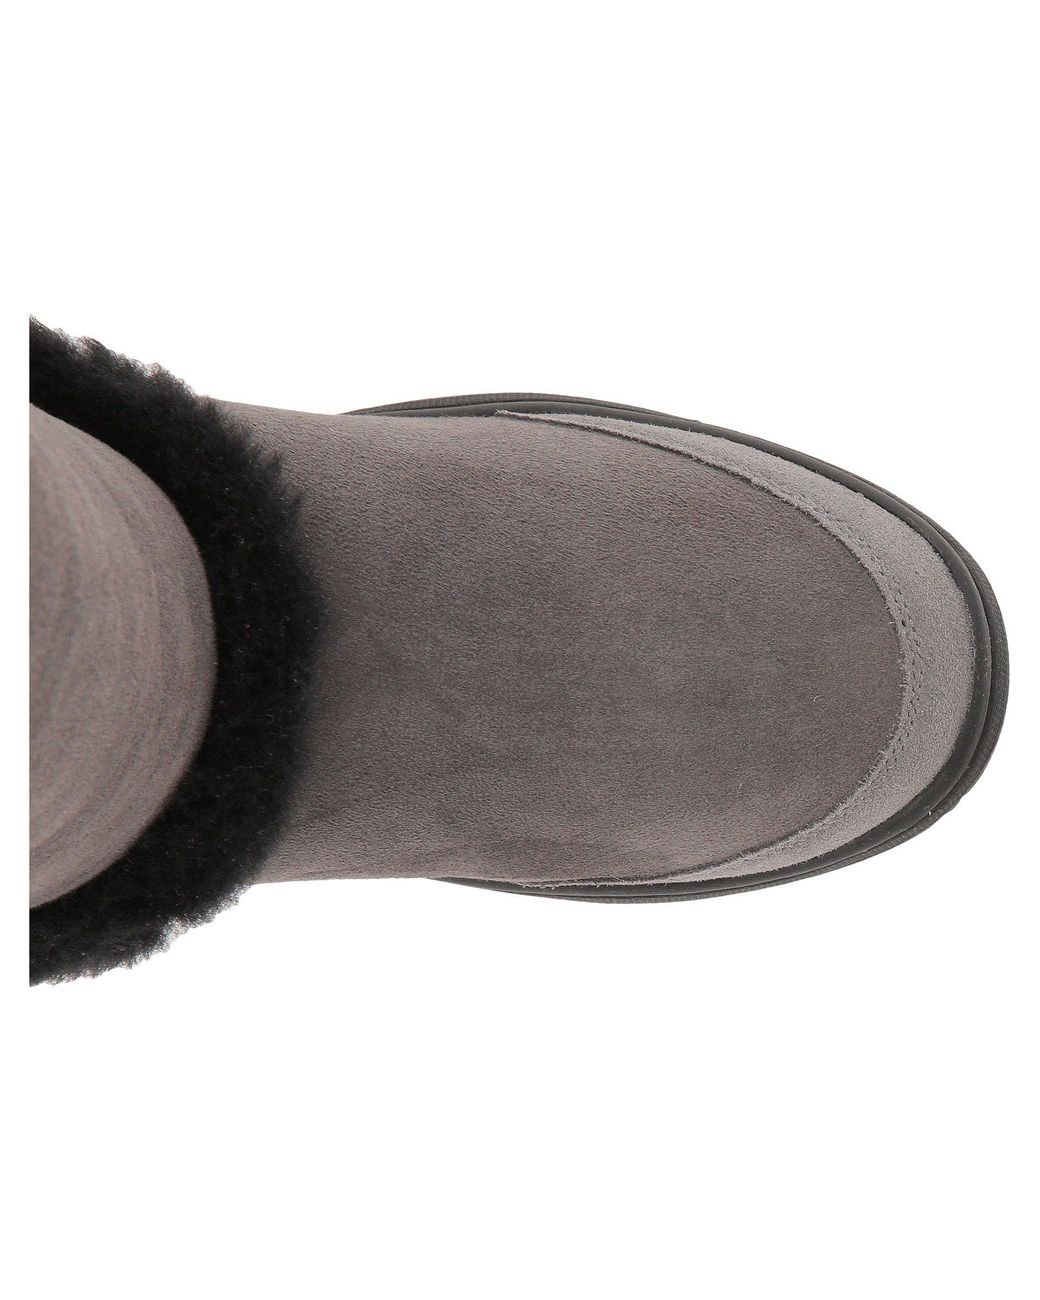 UGG Suede Sunburst Tall (grey/black) Women's Boots | Lyst